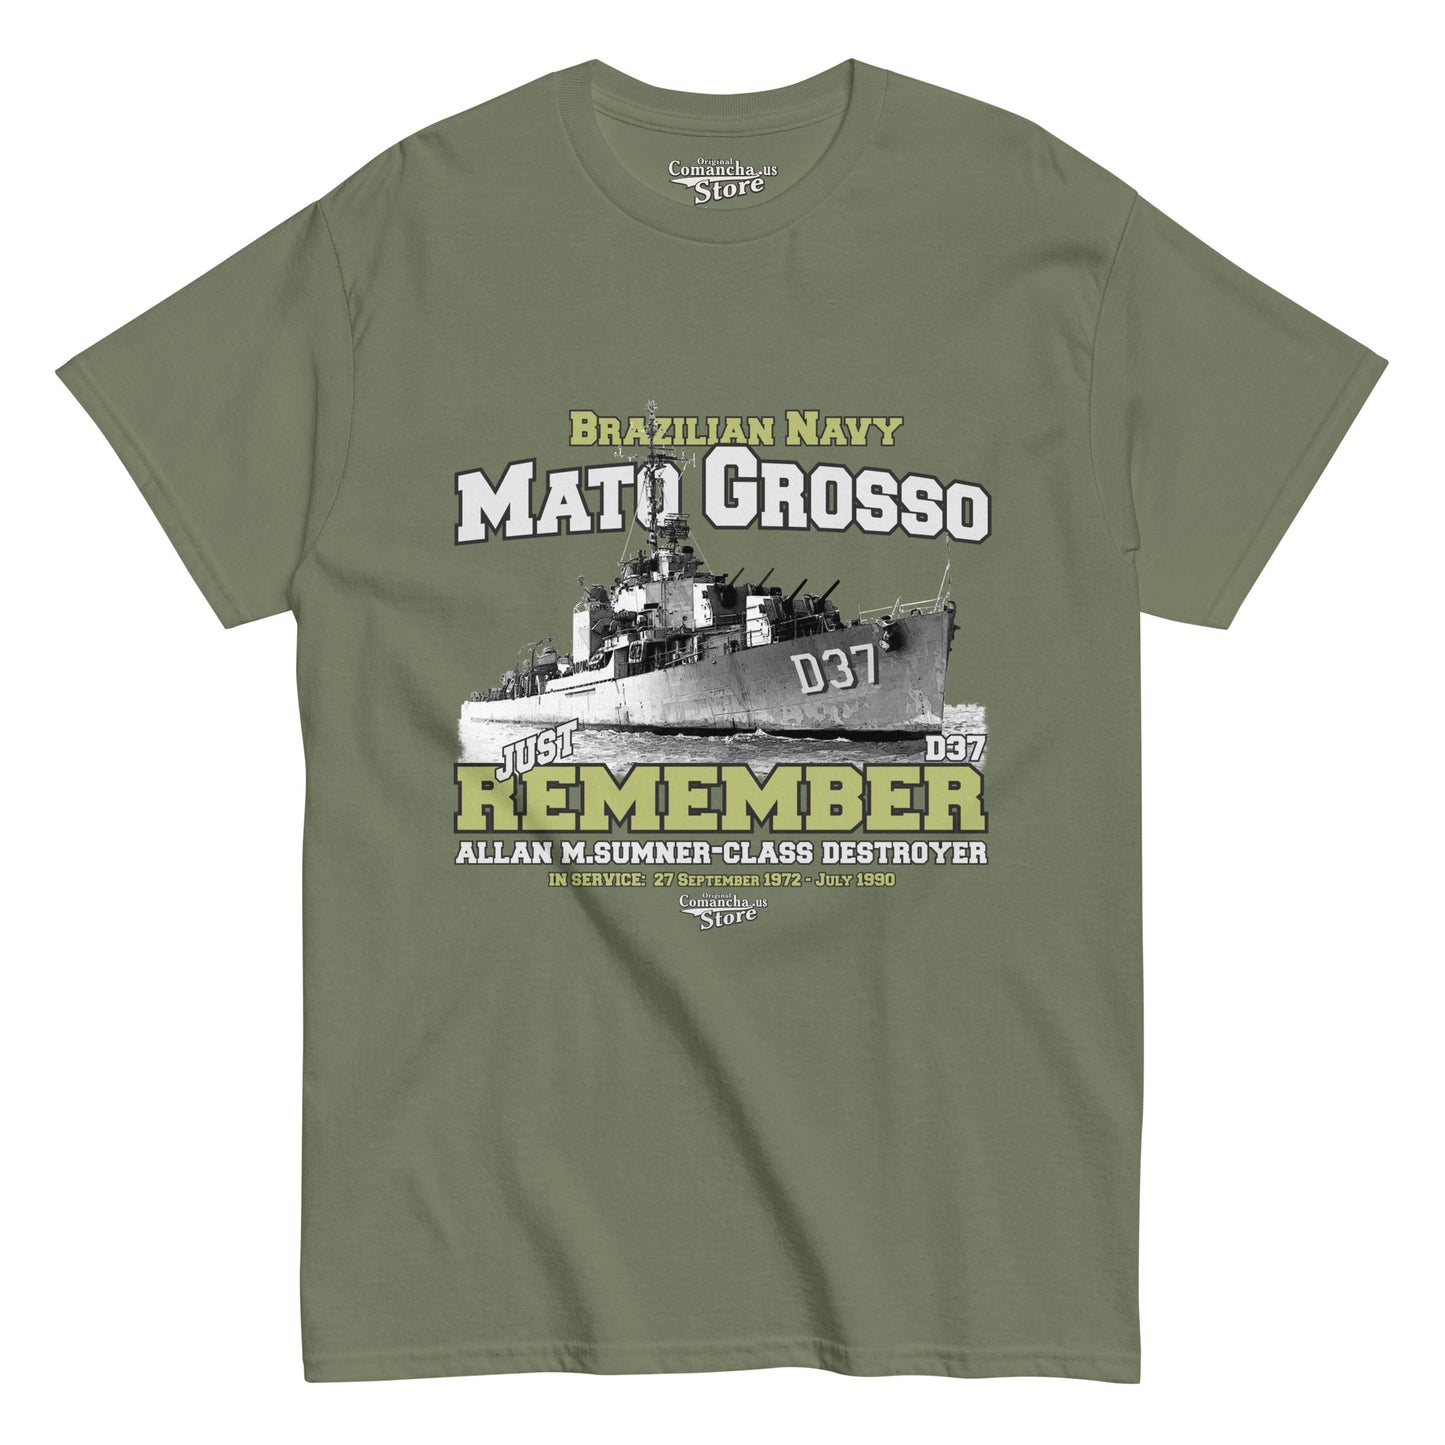 Mato Grosso D34 Destroyer t-shirt